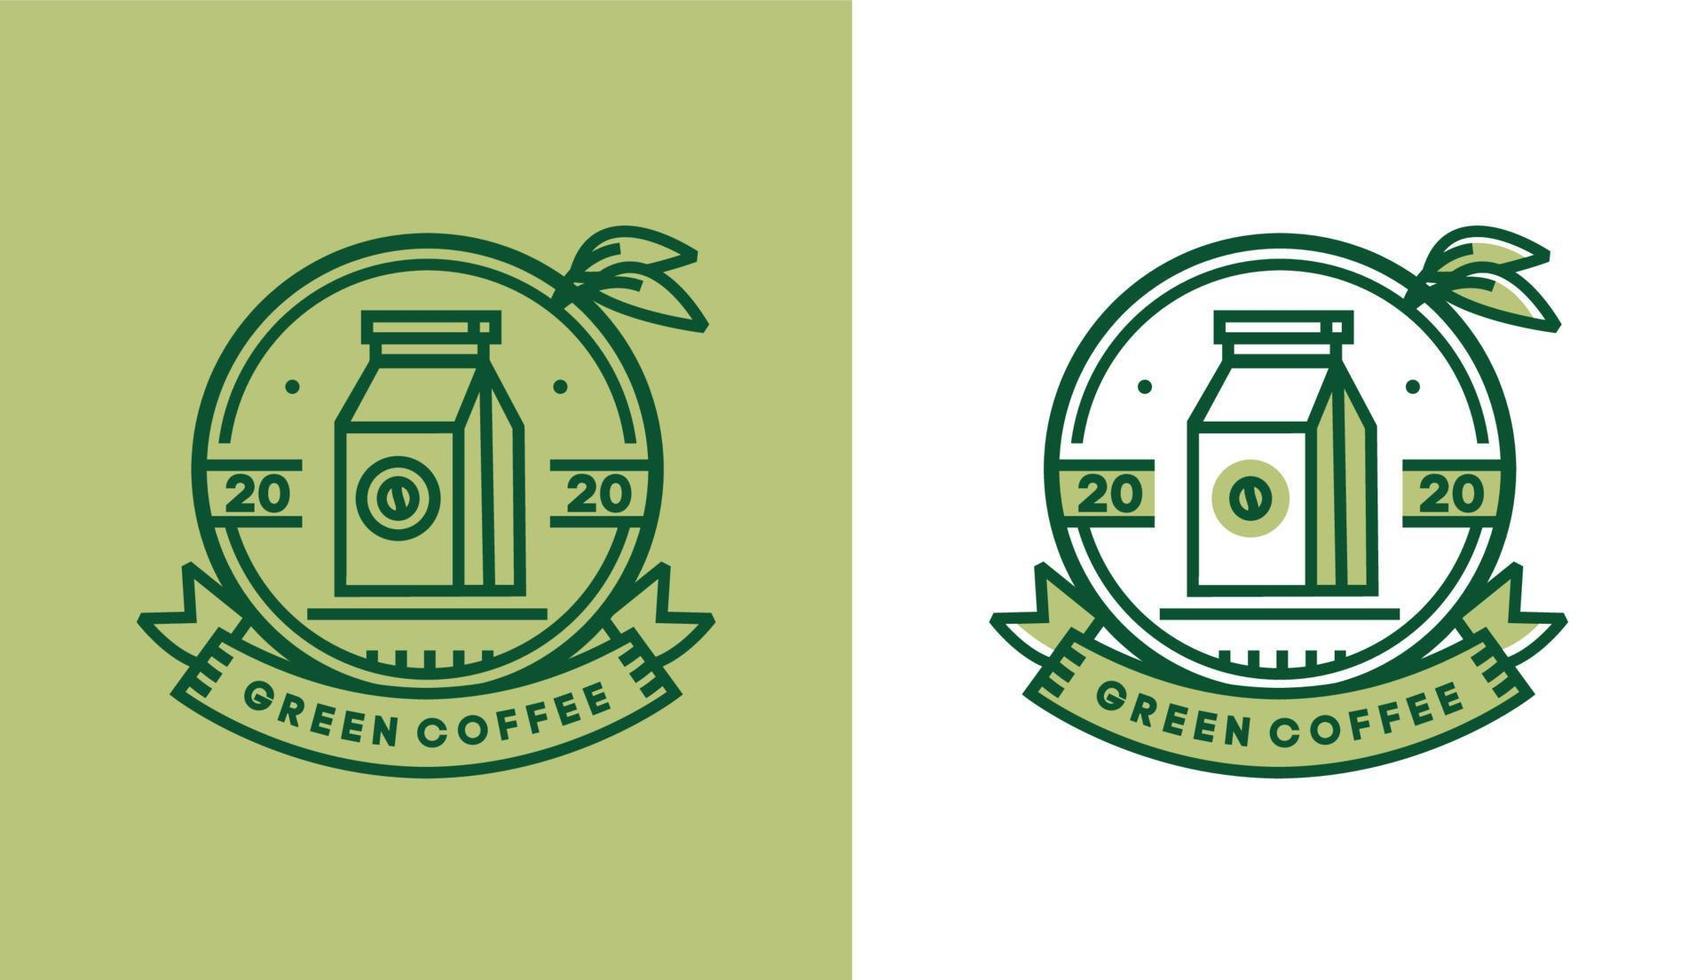 coffee logo design, modern vintage packaging for natural cafe shop menus, suitable for shop and restaurant businesses vector